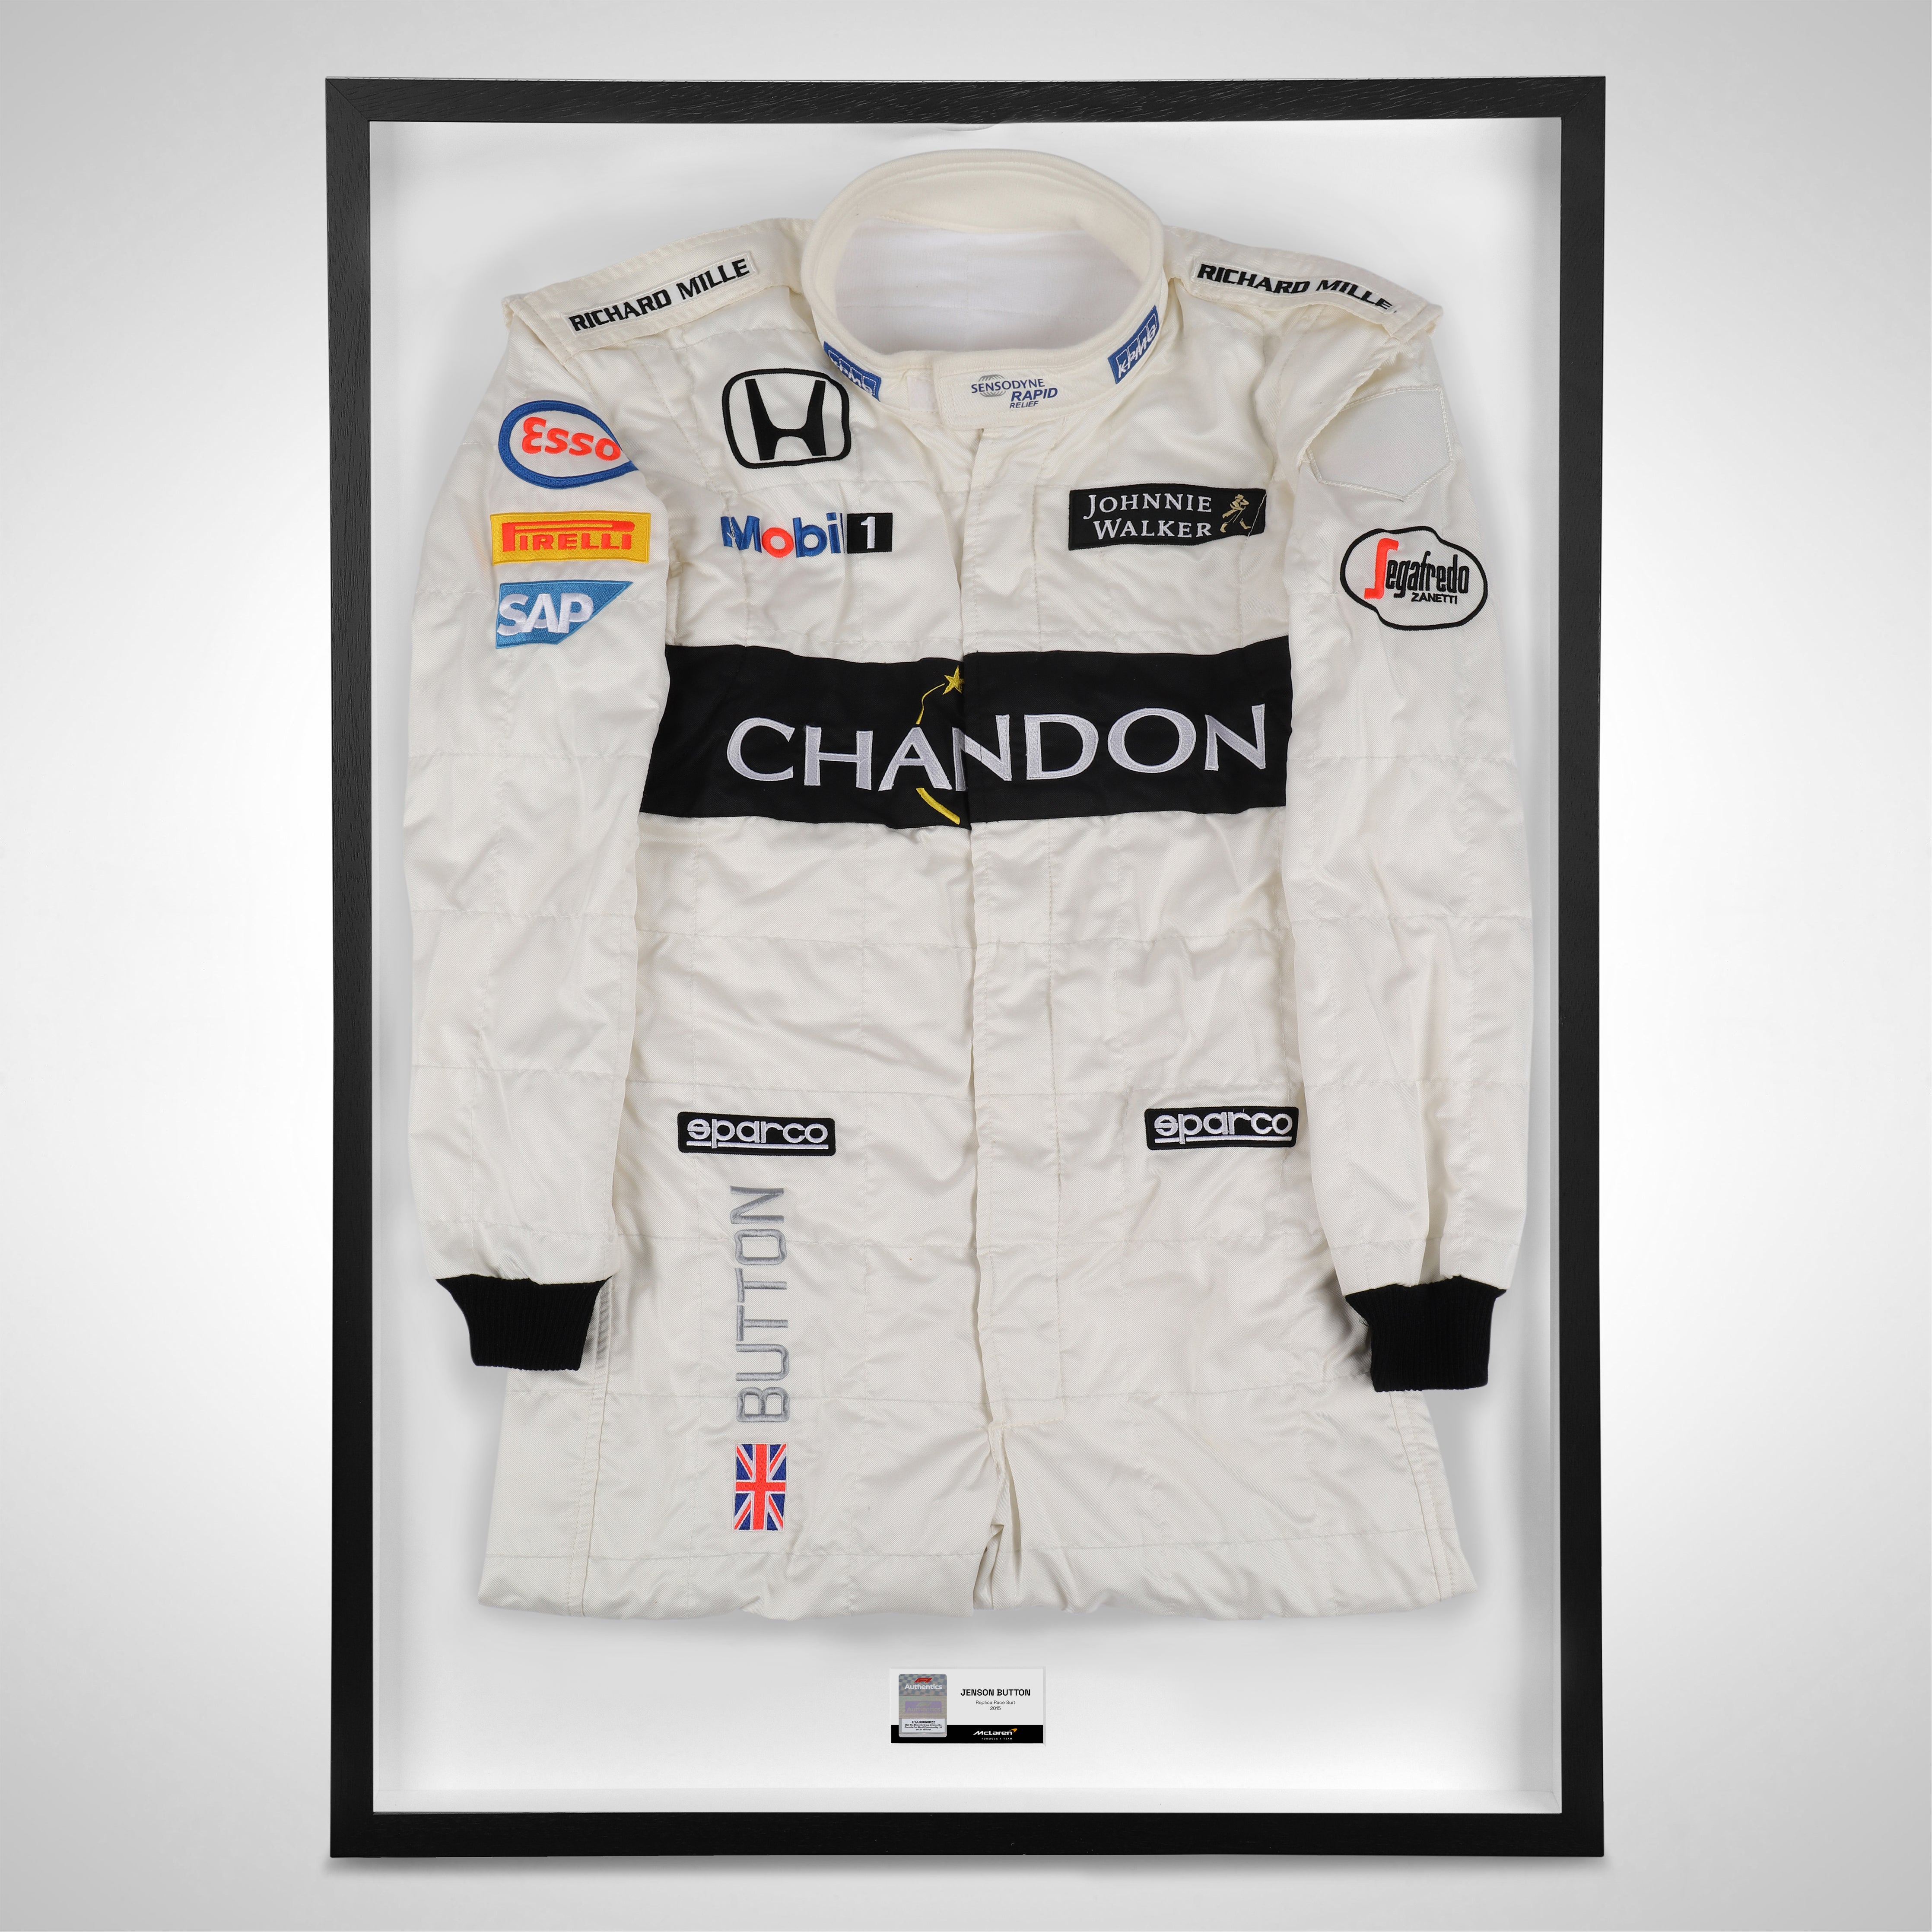 Jenson Button 2015 Replica McLaren F1 Team Race Suit - Chandon , Johnnie Walker & Segafredo Branding